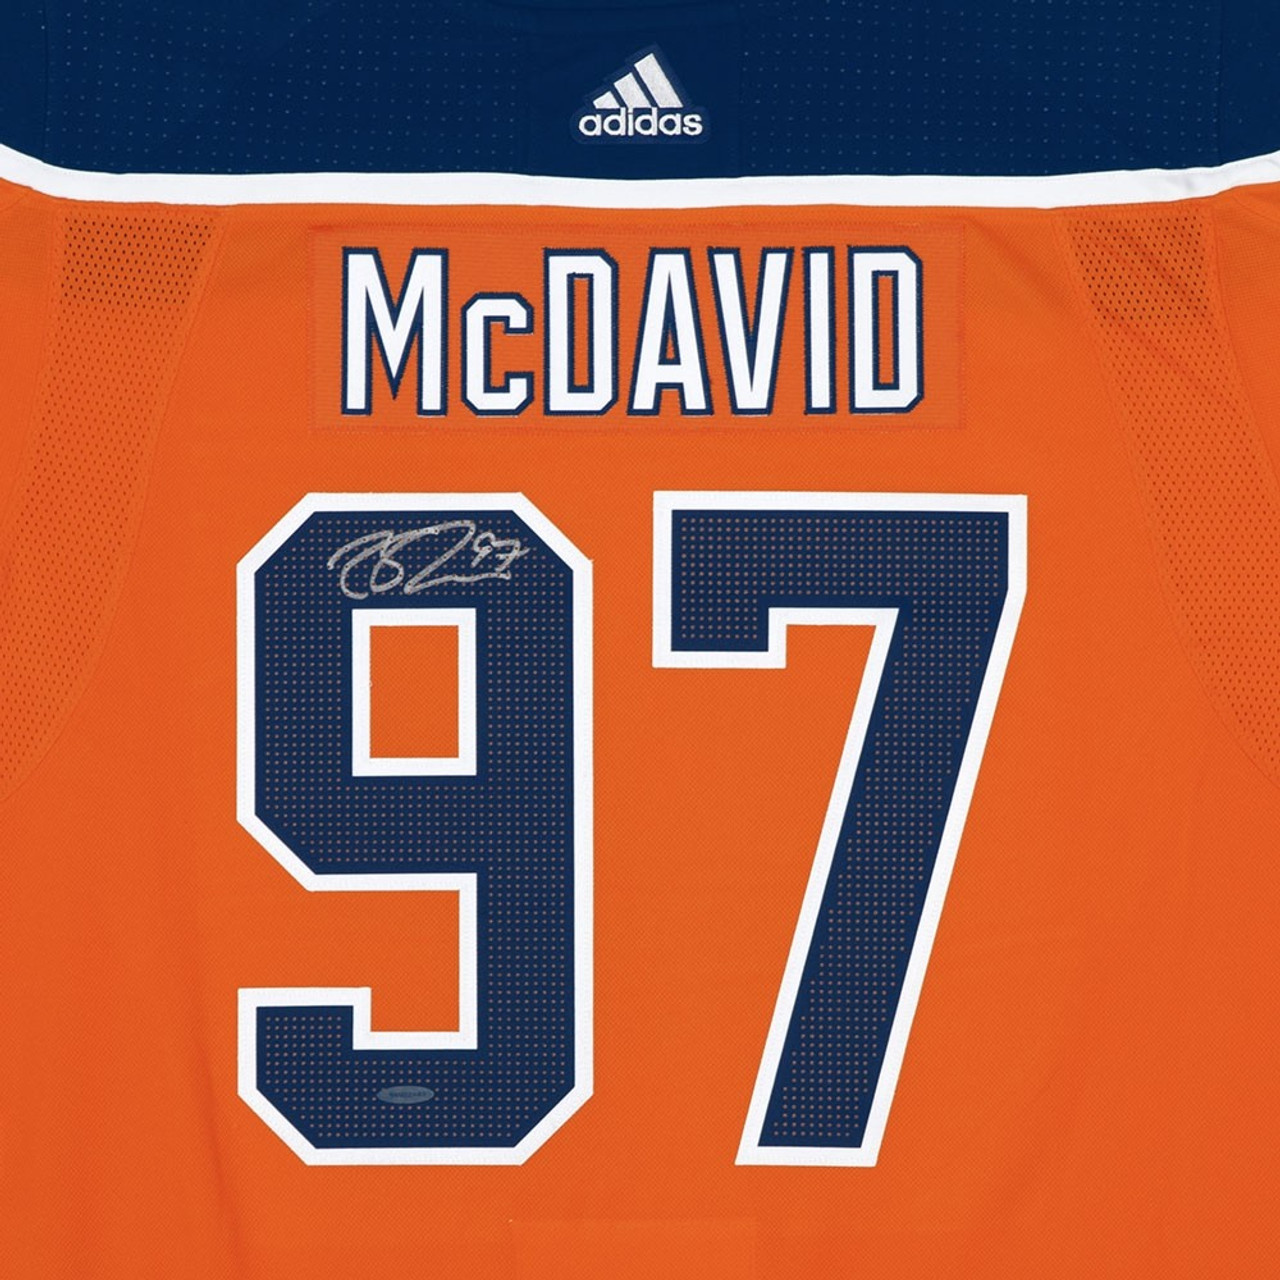 Connor McDavid Edmonton Oilers adidas Alternate Authentic Player